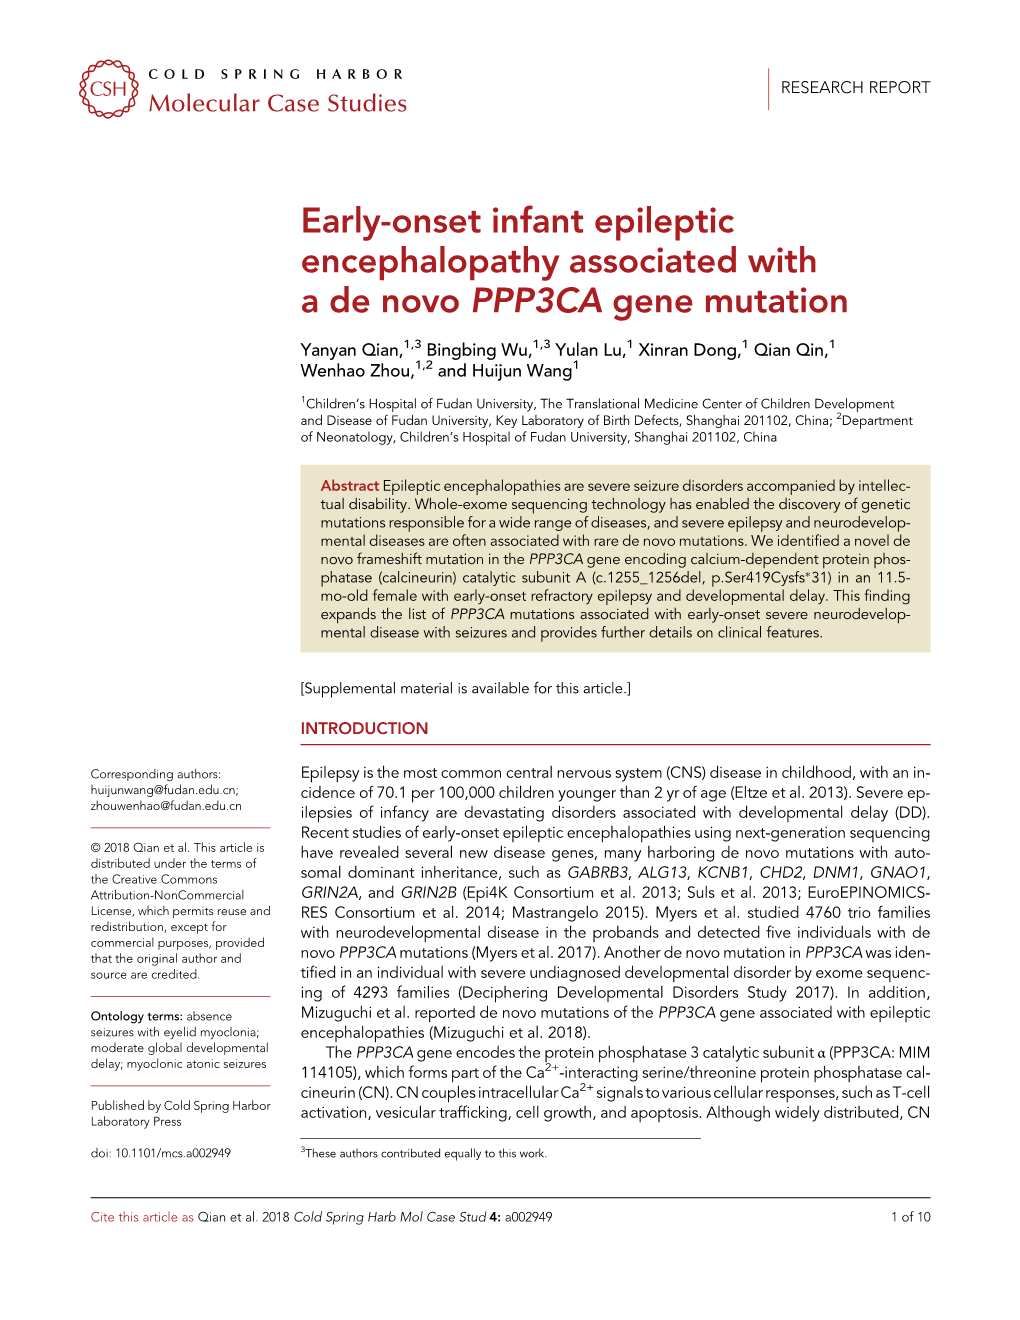 Early-Onset Infant Epileptic Encephalopathy Associated with Adenovoppp3ca Gene Mutation